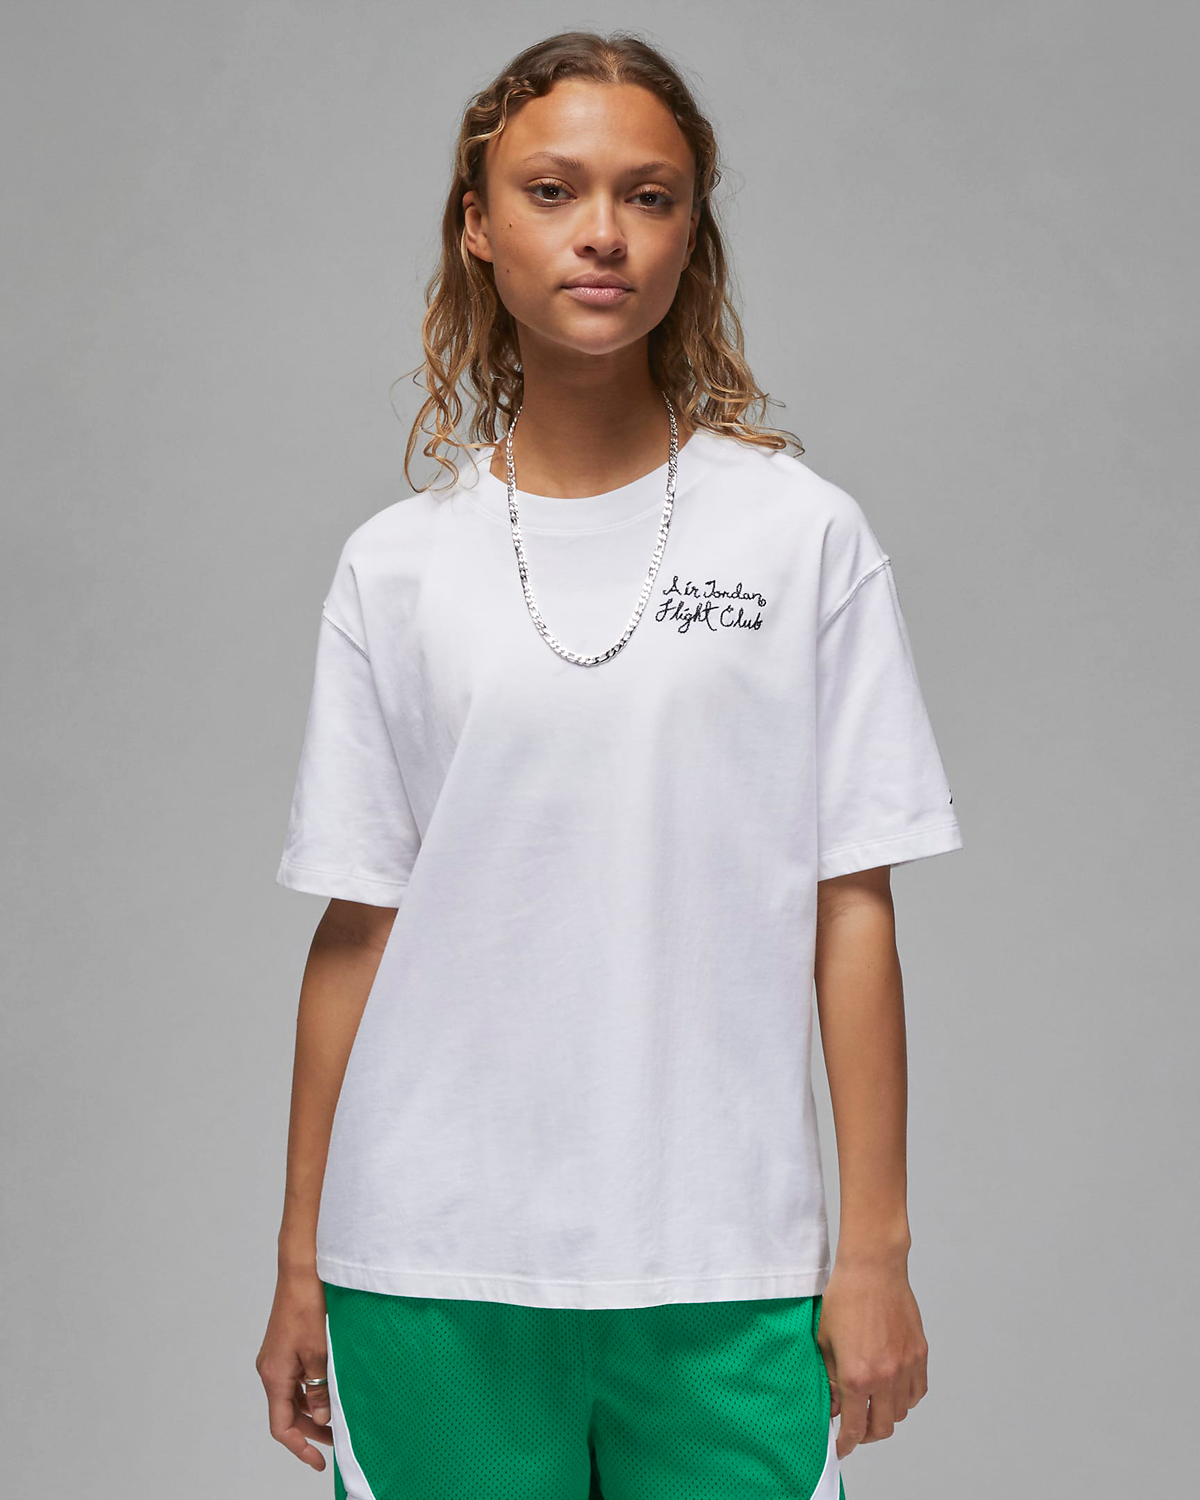 Jordan-Womens-Flight-Club-T-Shirt-White-1